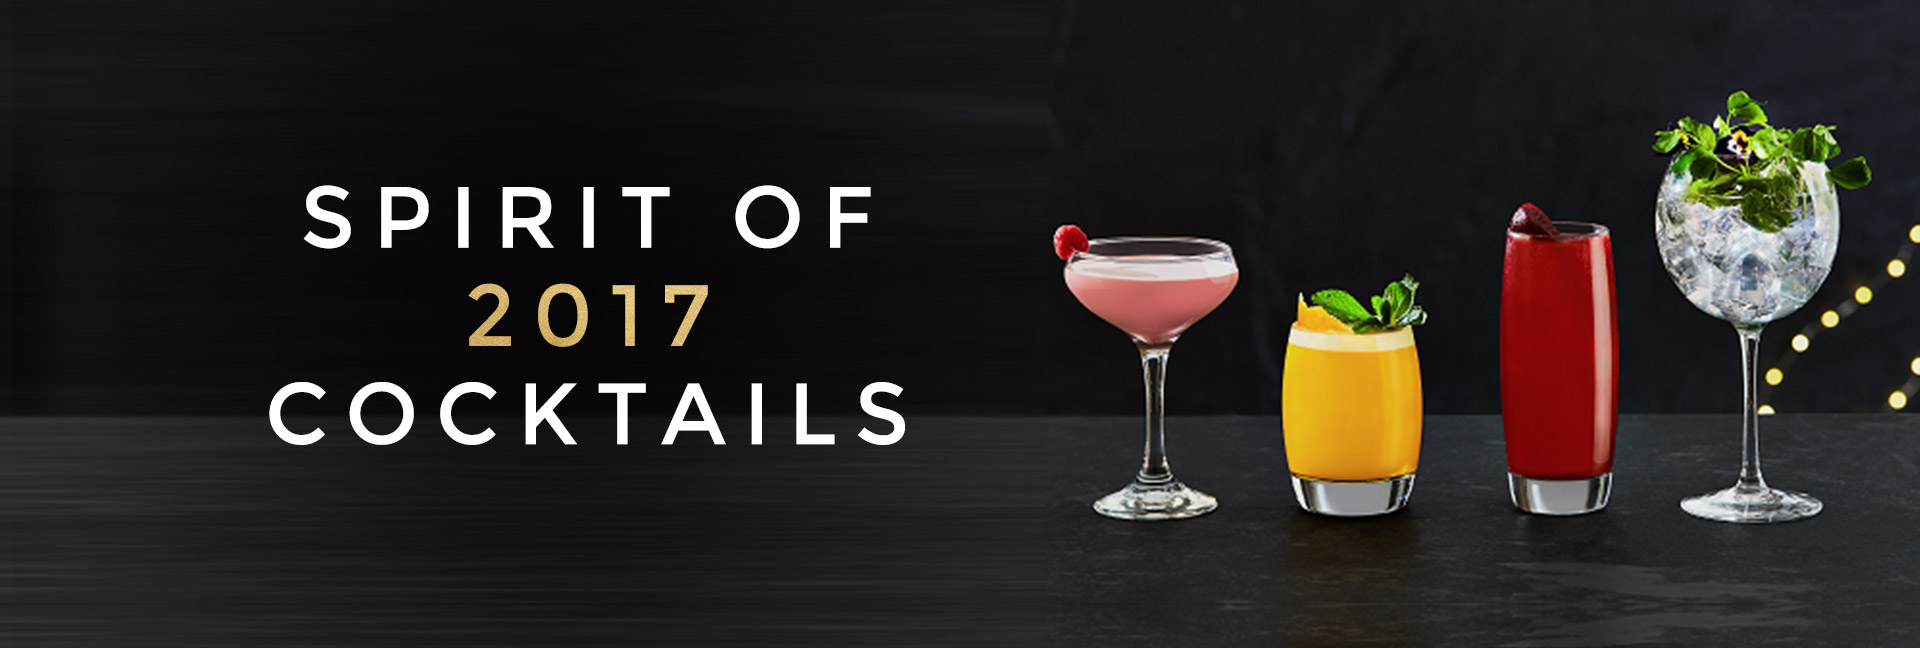 Spirit of 2017 cocktails at All Bar One Harrogate